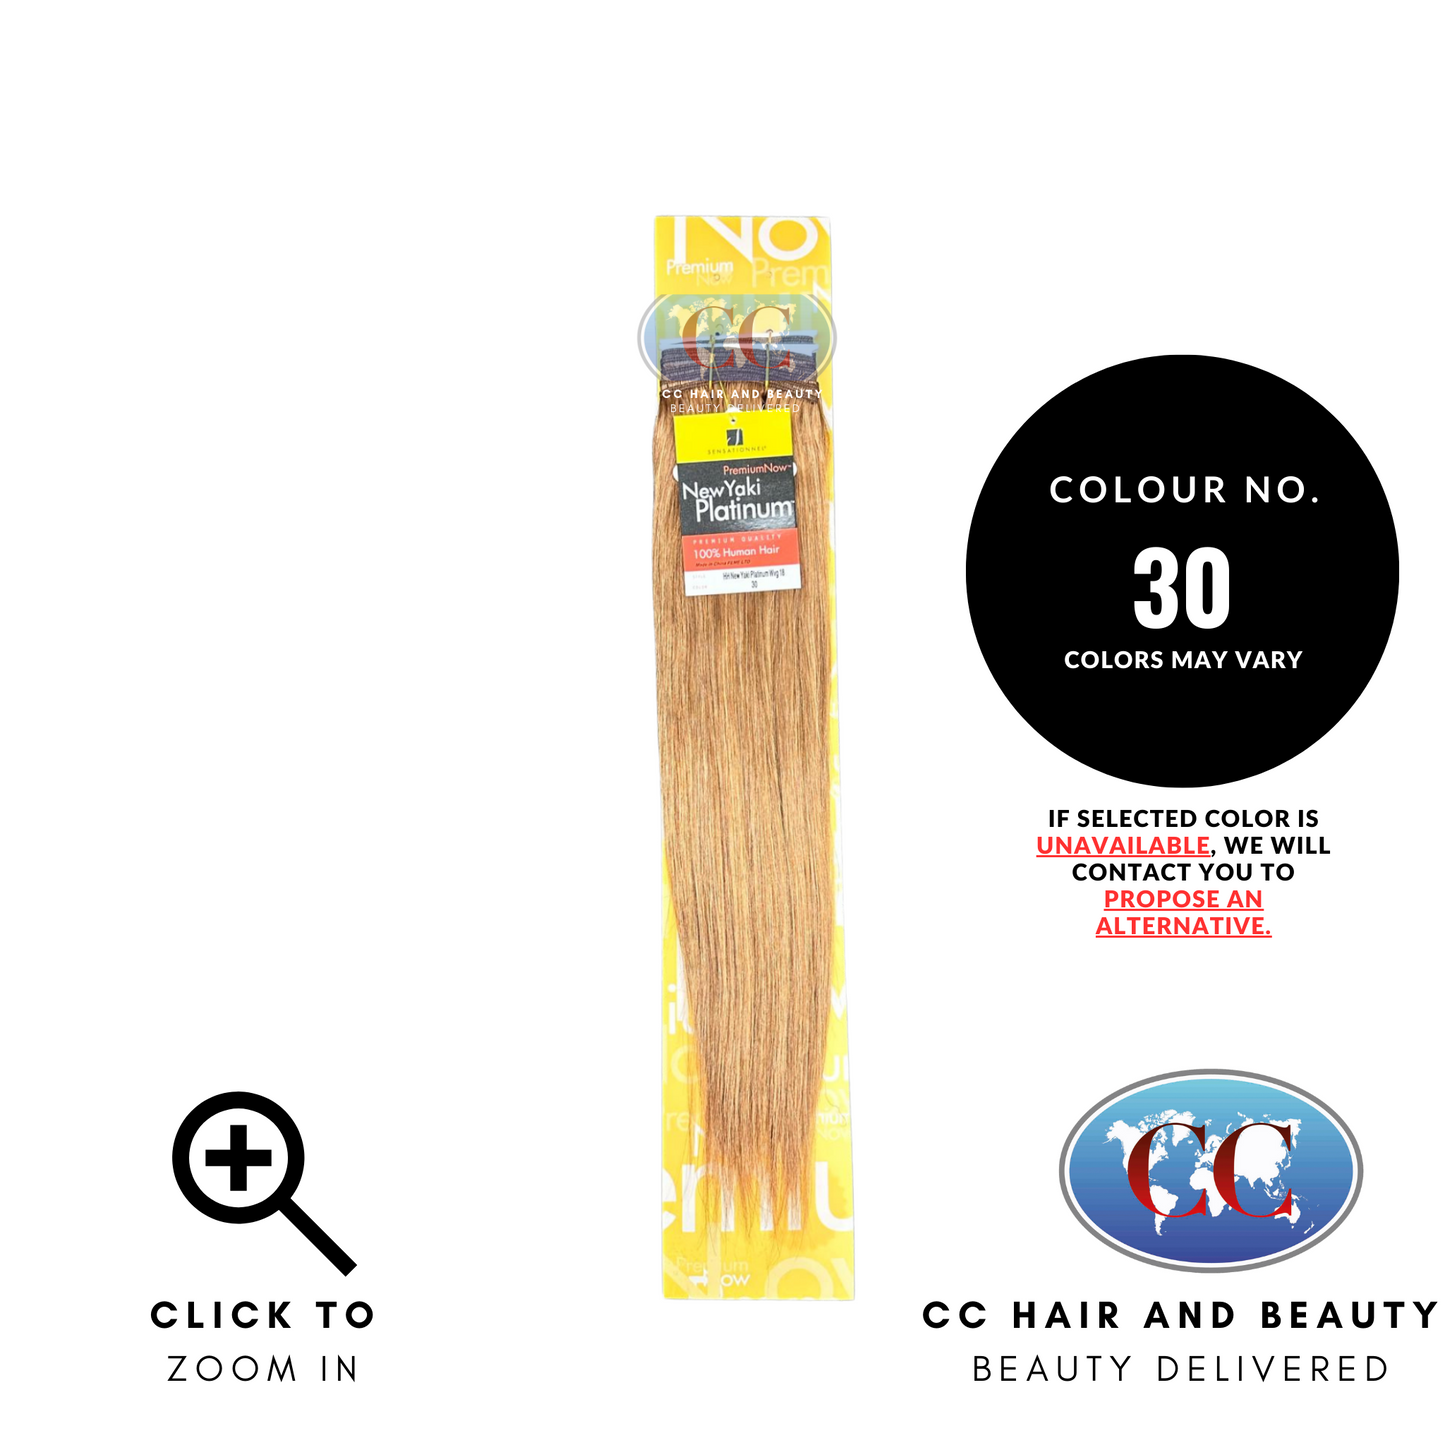 Sensationnel Premium Now New Yaki Platinum Weave 100% Human Hair Extensions